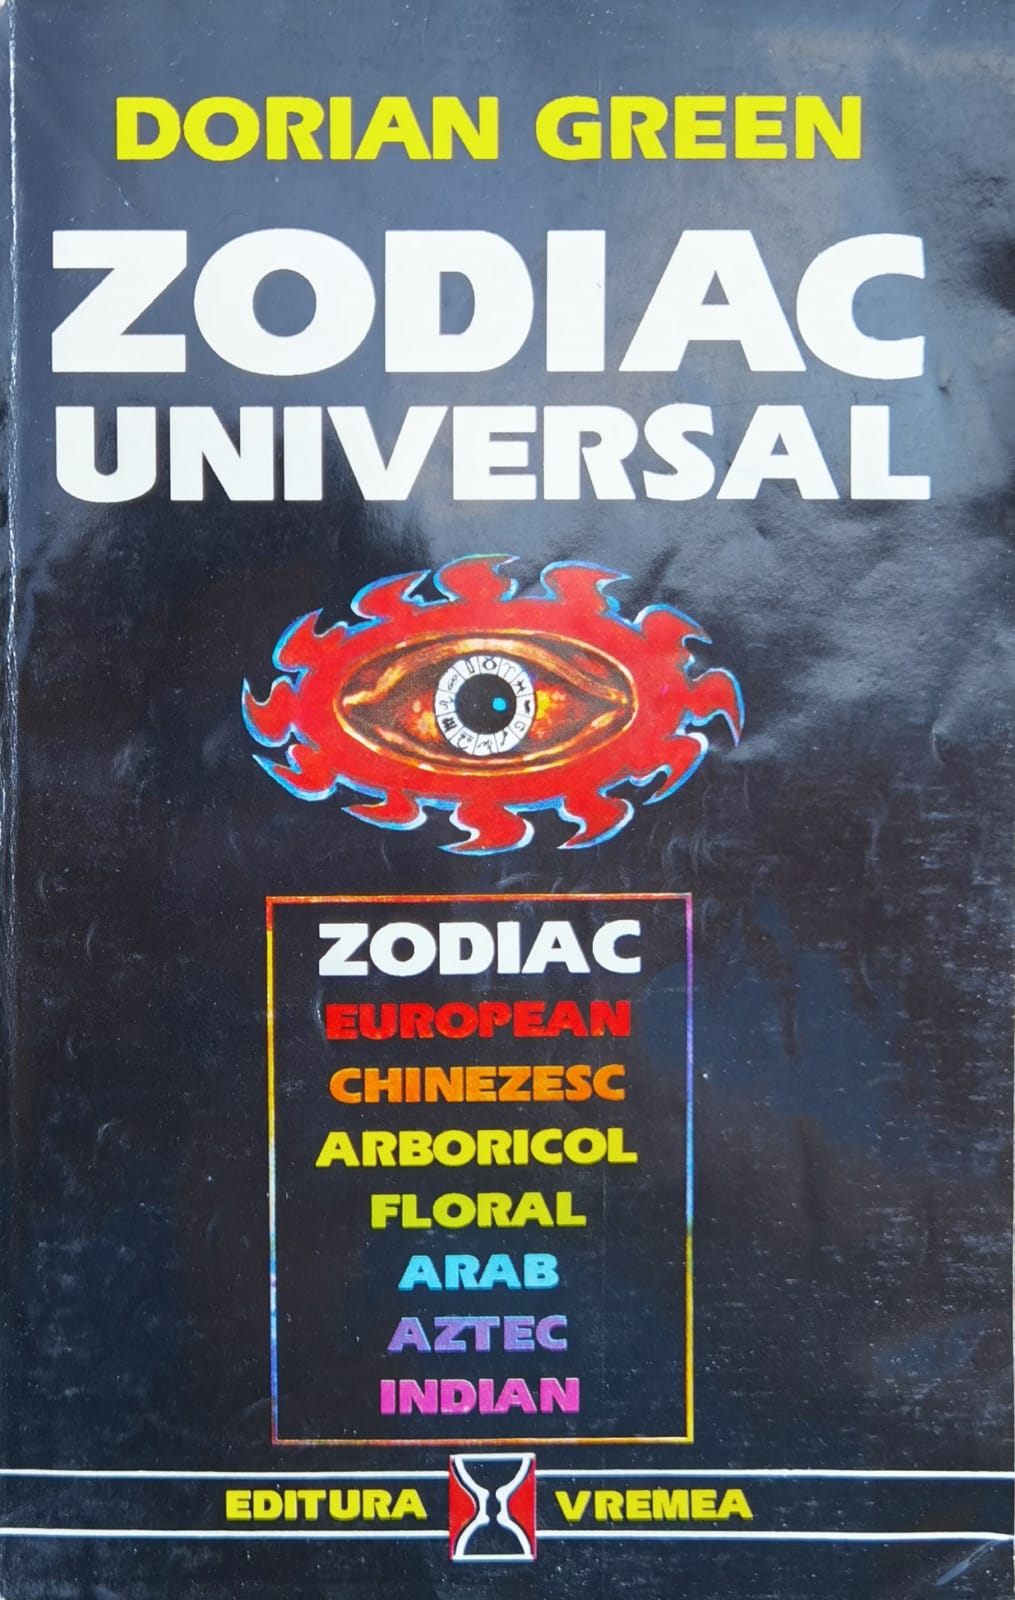 zodiac universal                                                                                     dorian green                                                                                        